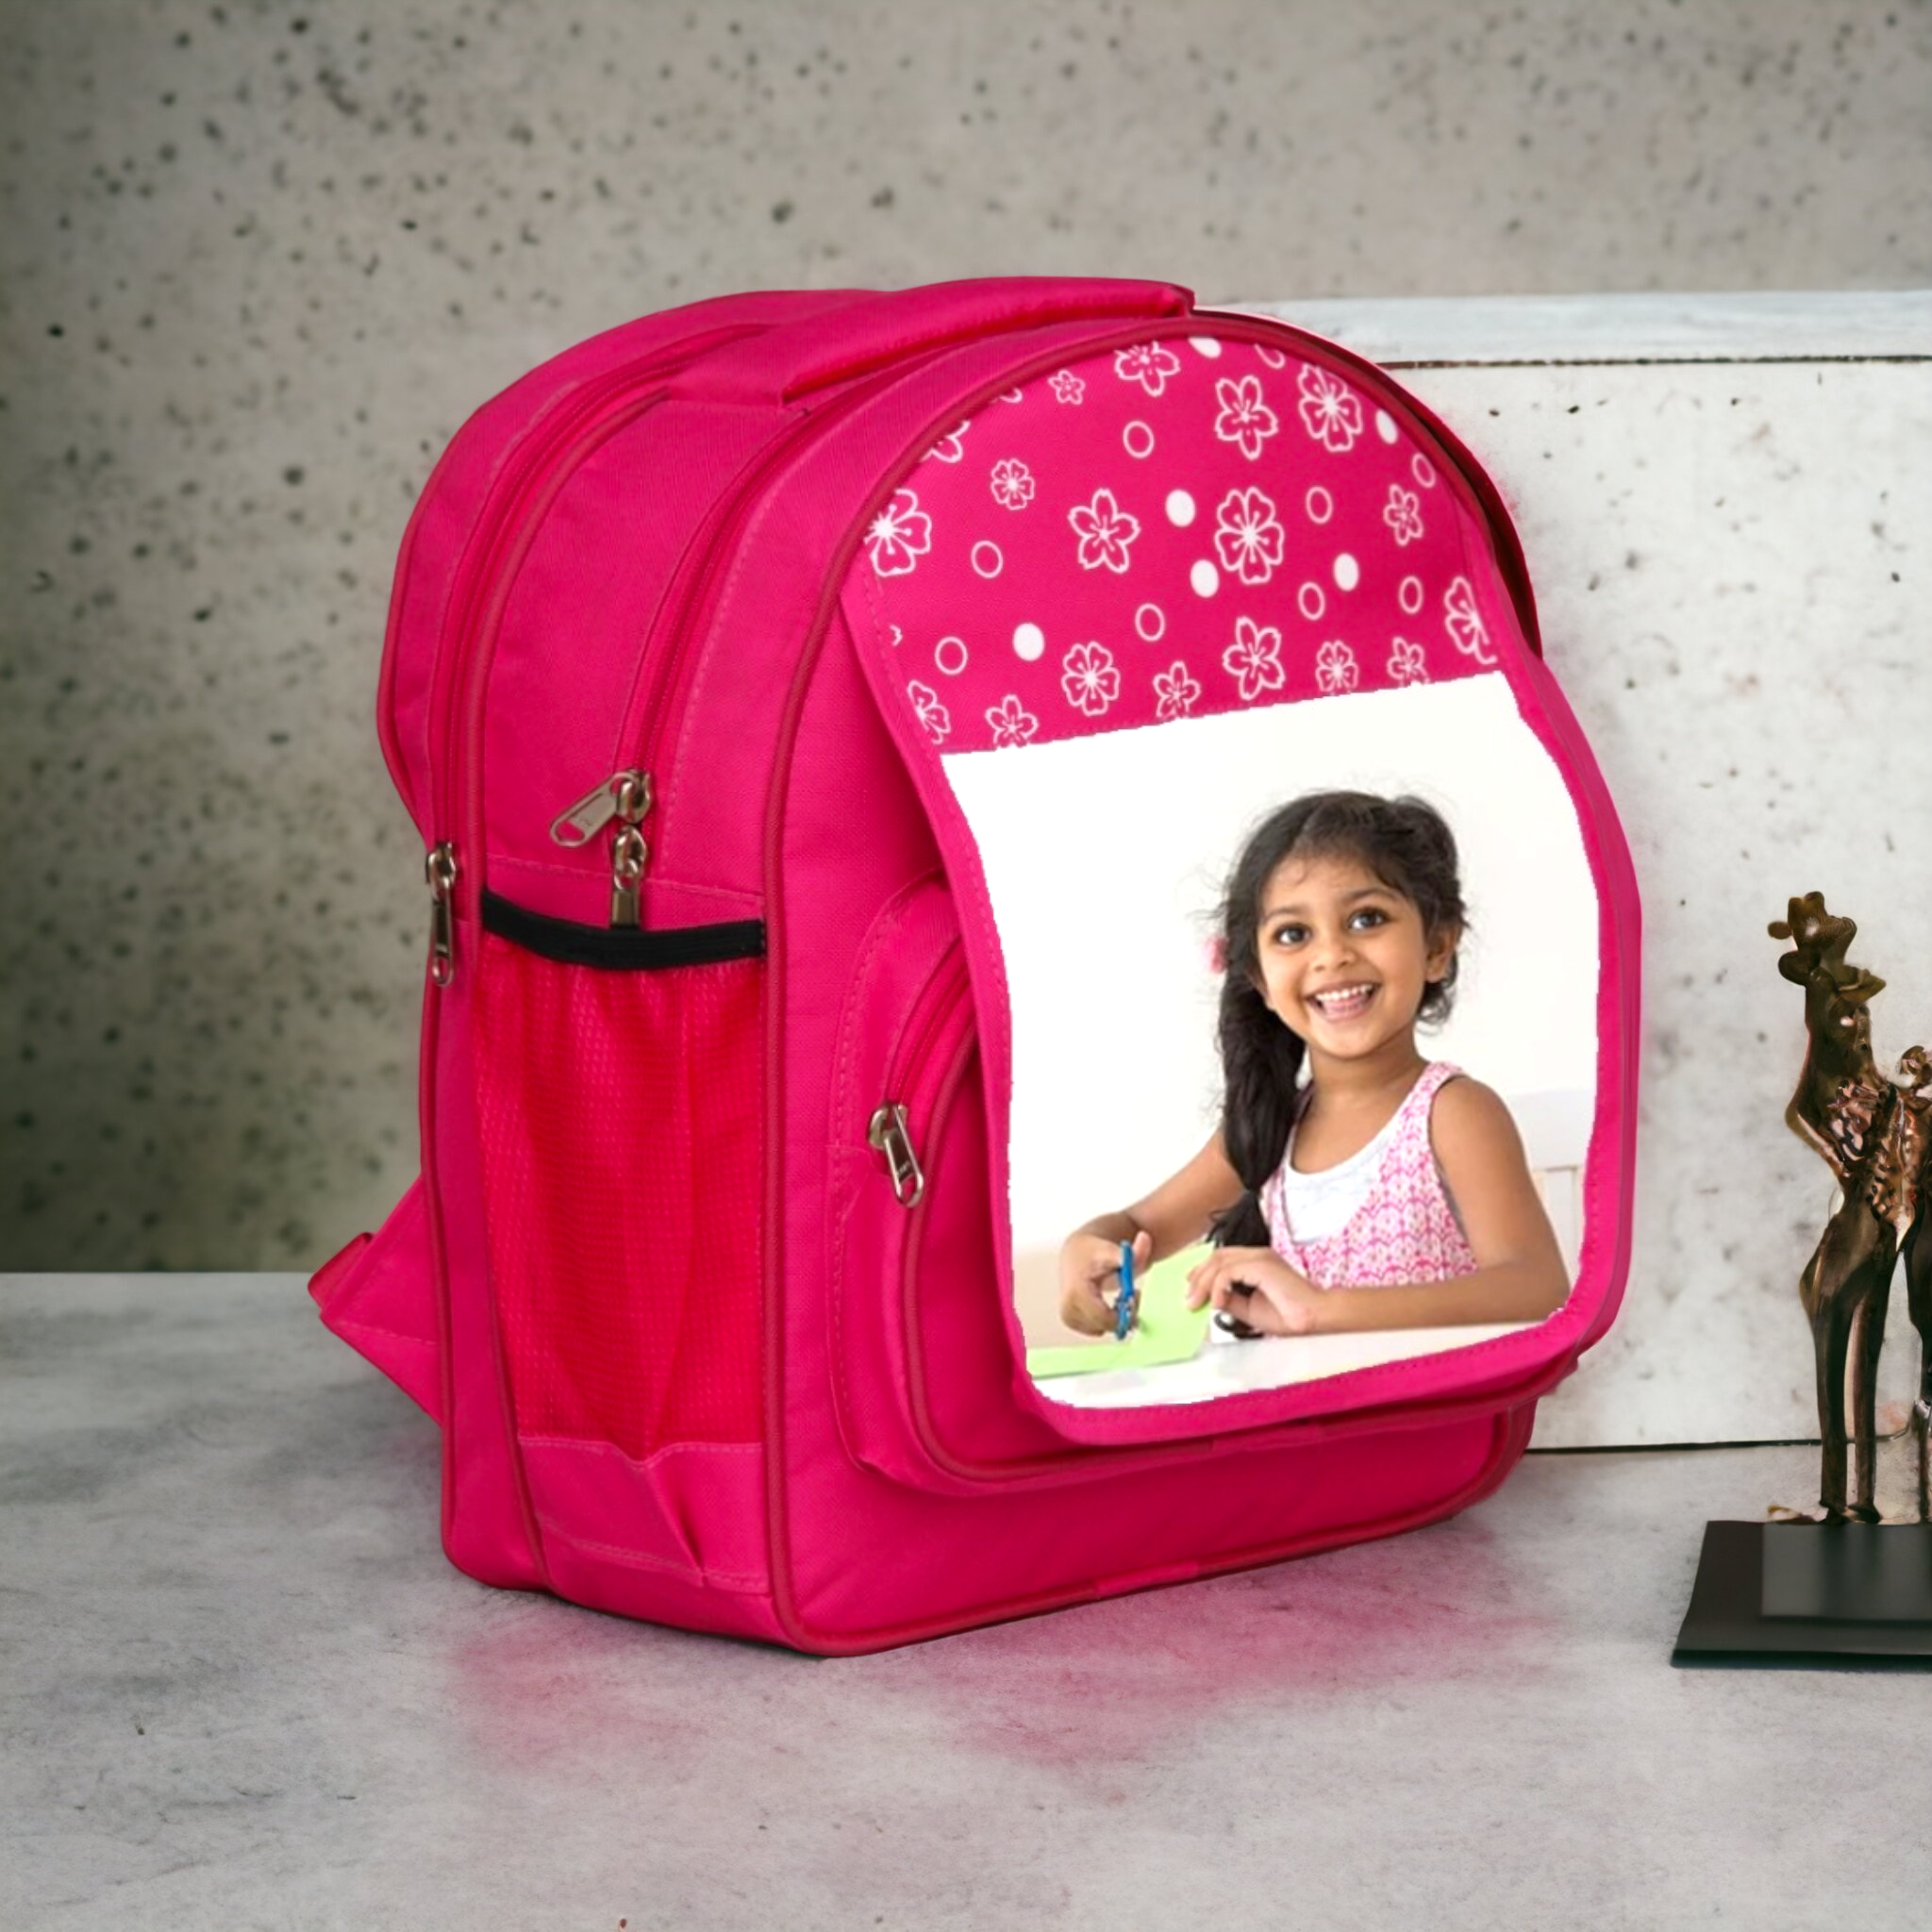 Customized kids school bag | School bag for kids | Kids school bag under 1000 rs |School bags | Best school bag for kids